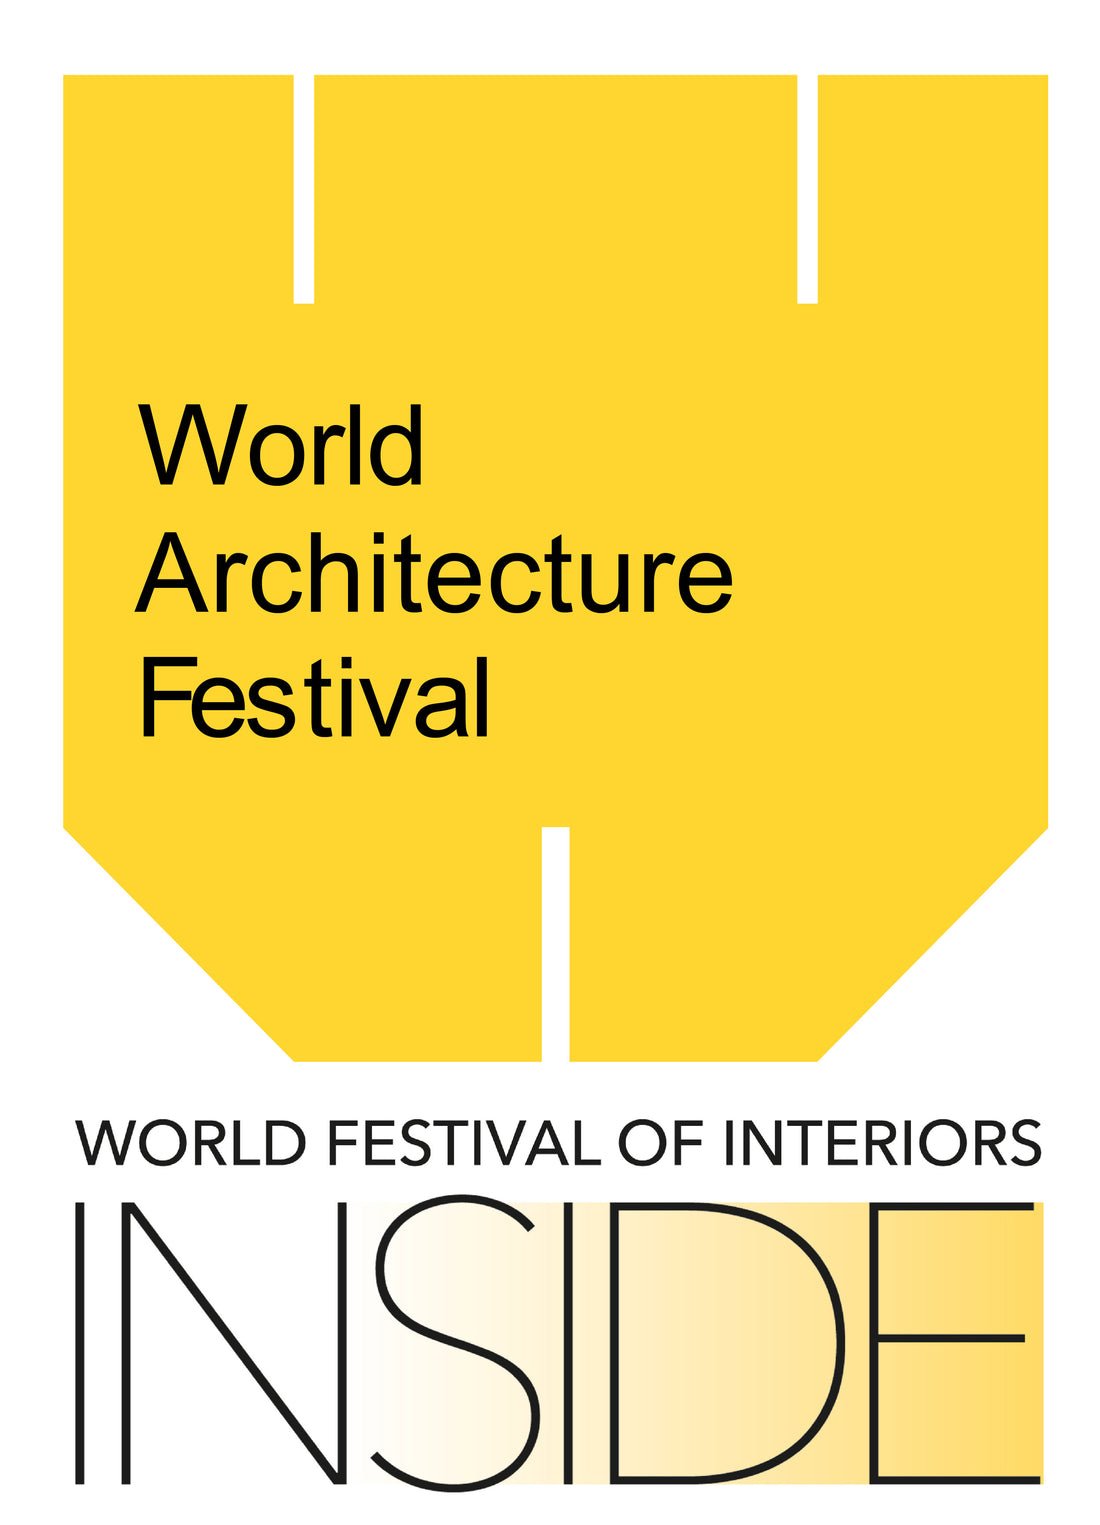 World Architecture Festival - Category Winner